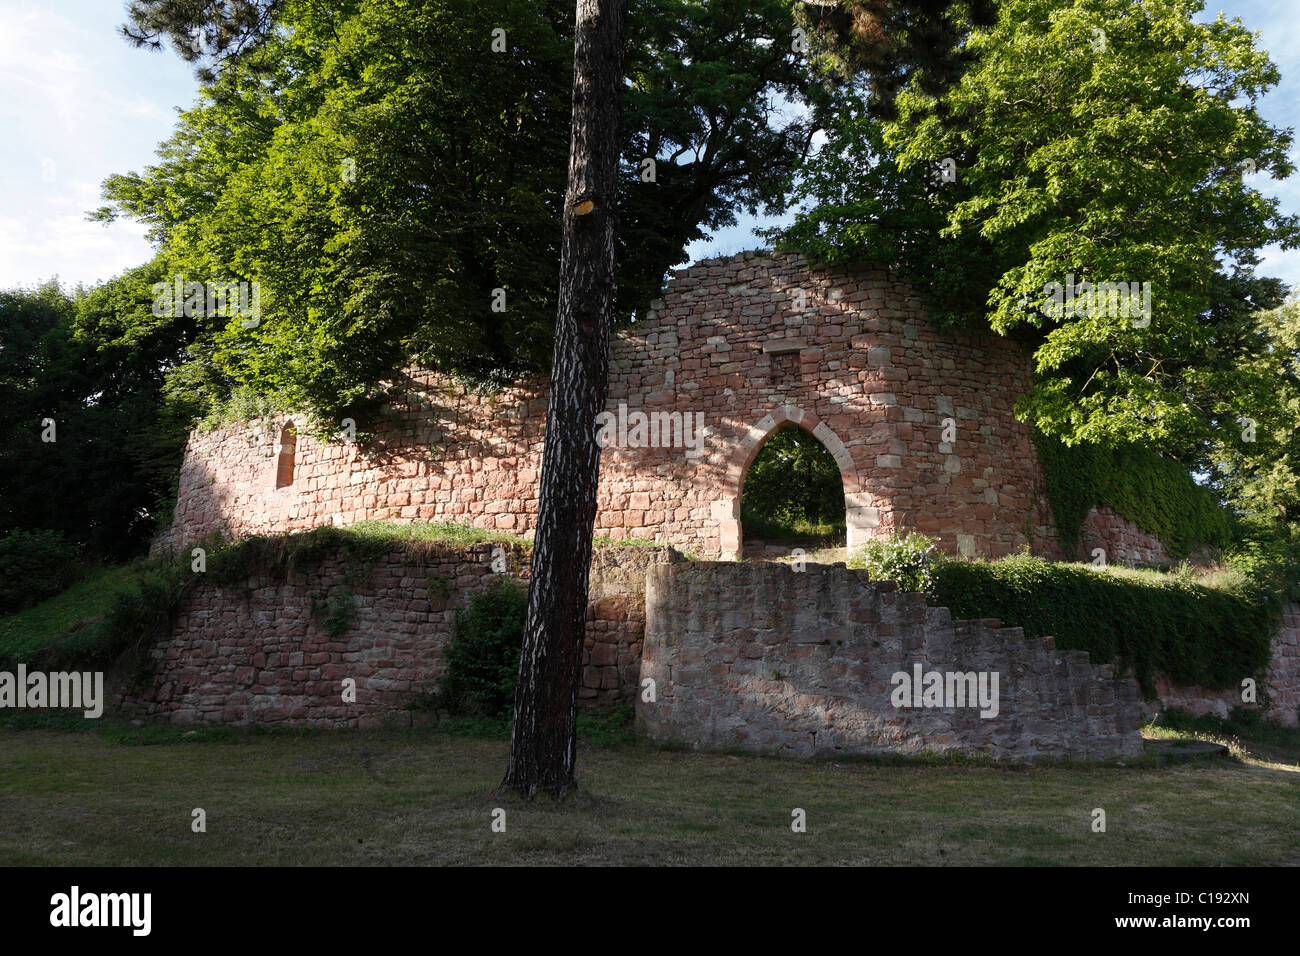 Maienluft fortress ruin, Wasungen, Rhoen, Thuringia, Germany, Europe Stock Photo